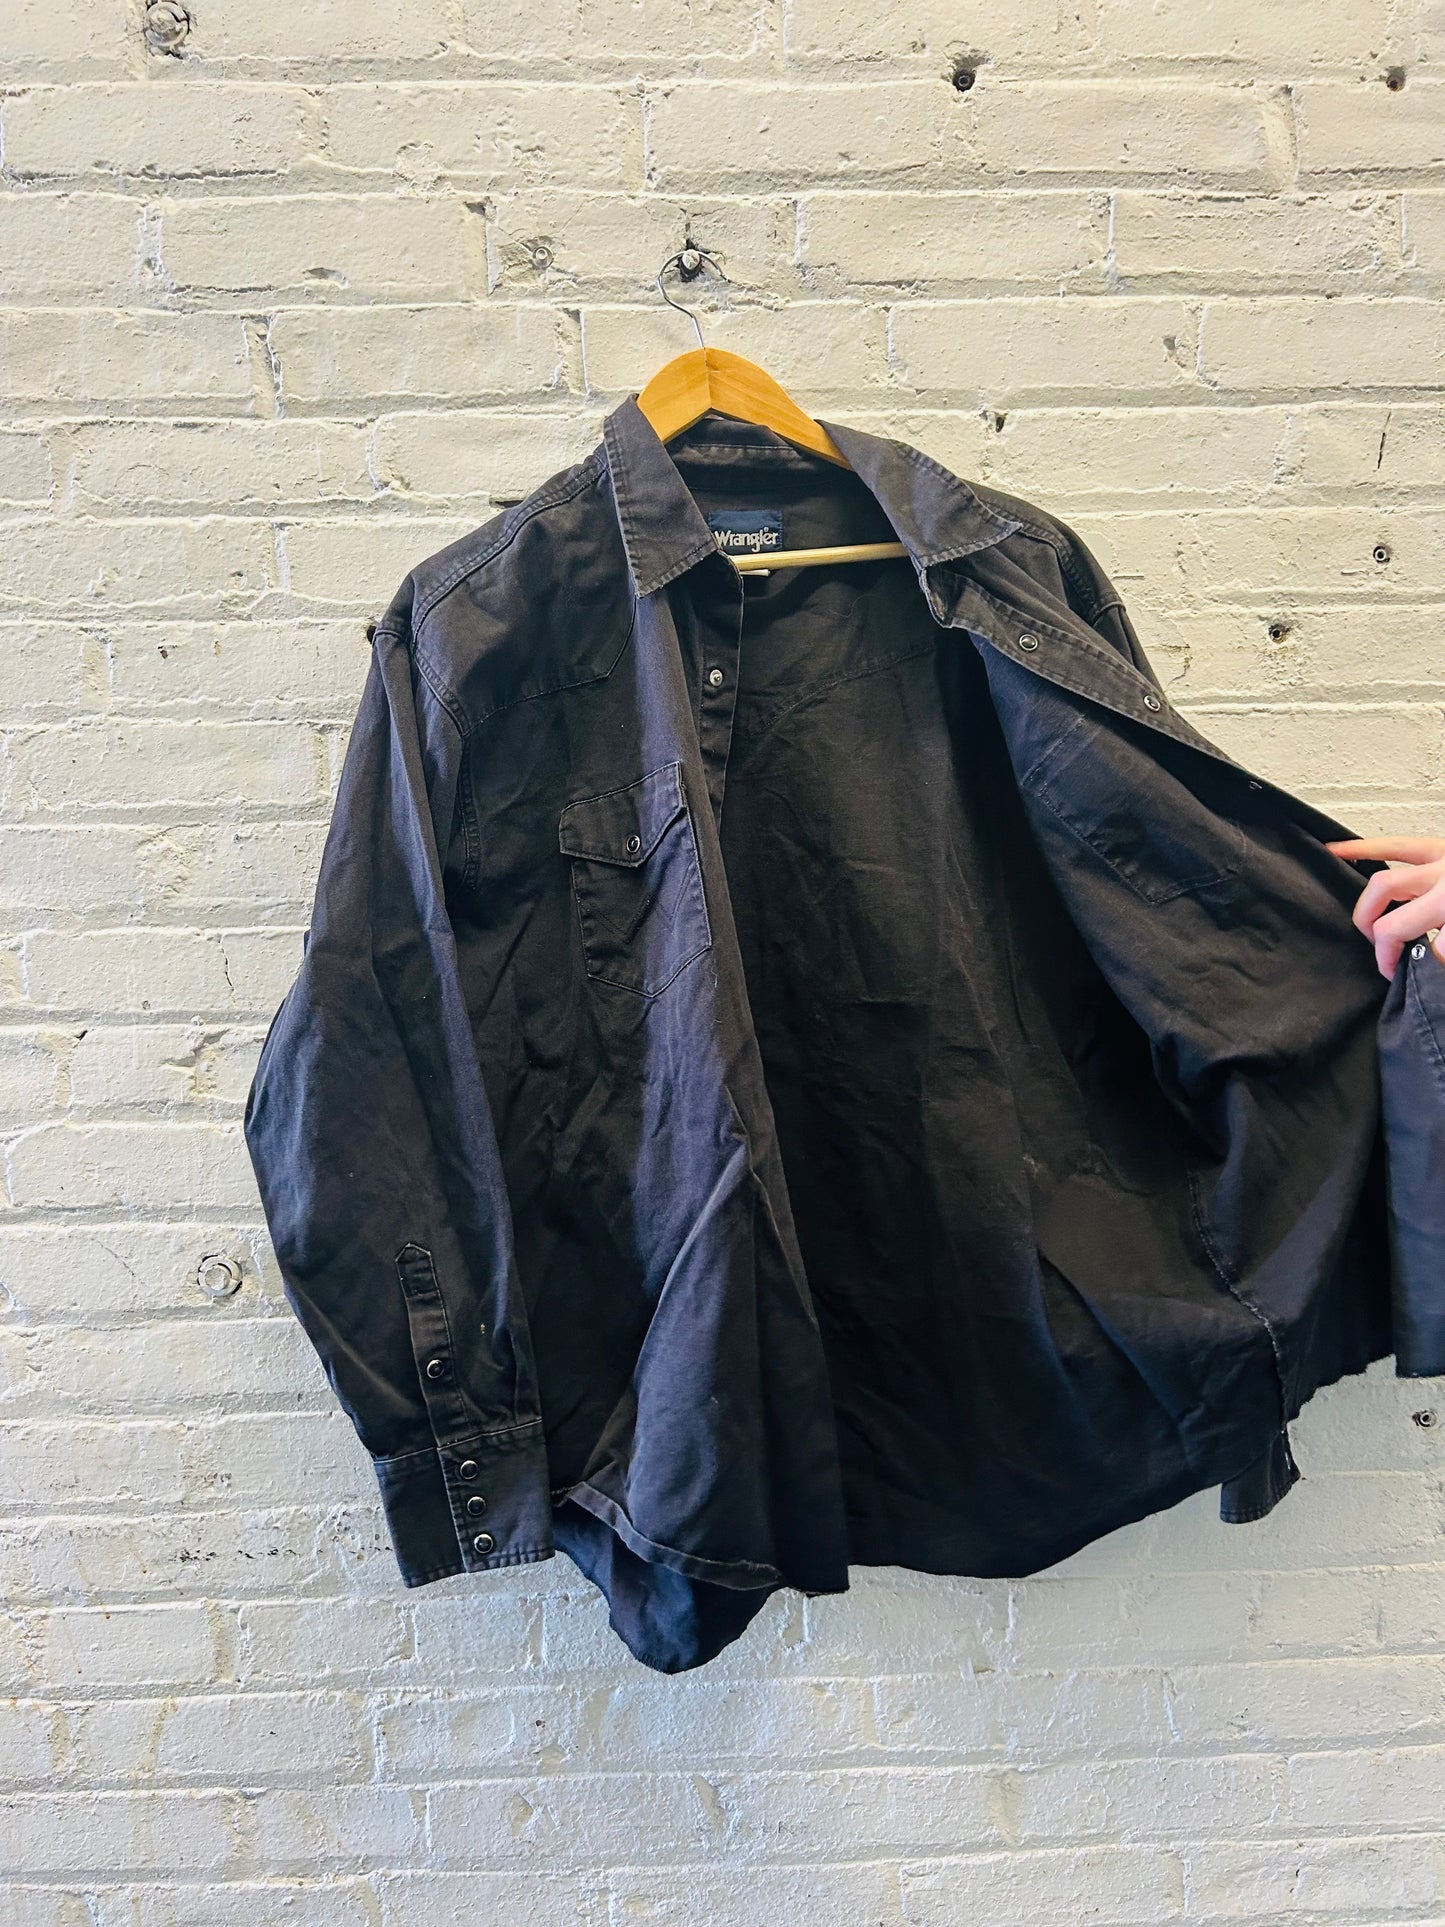 Wrangler Black Button Up Shirt - XL